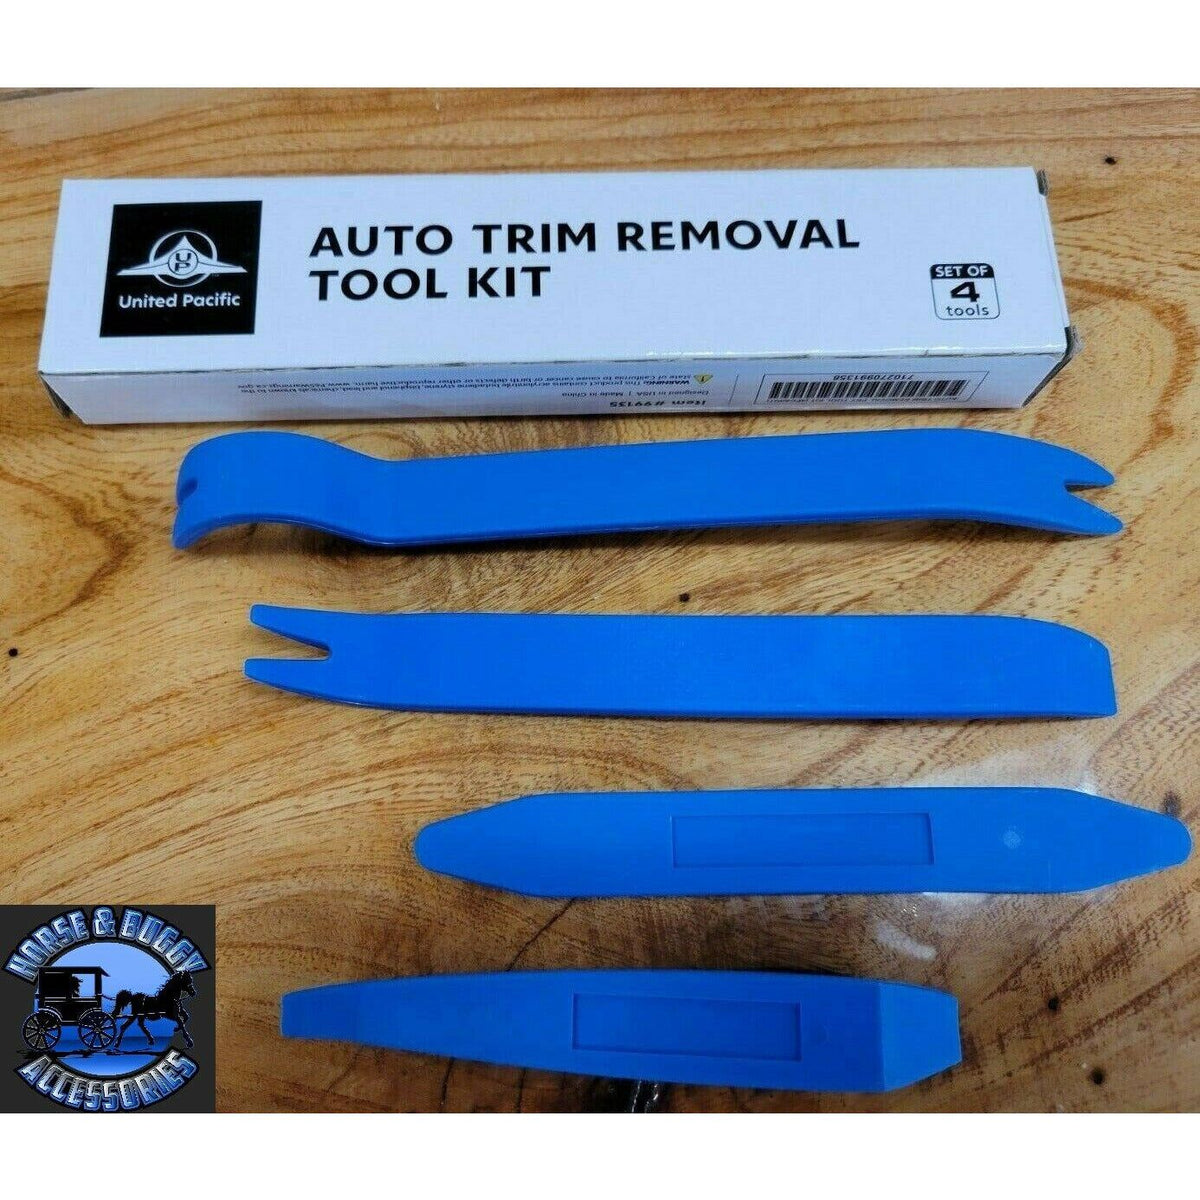 Auto Trim Removal Pry Tool Kit 4Pcs/Kit blue door, interior